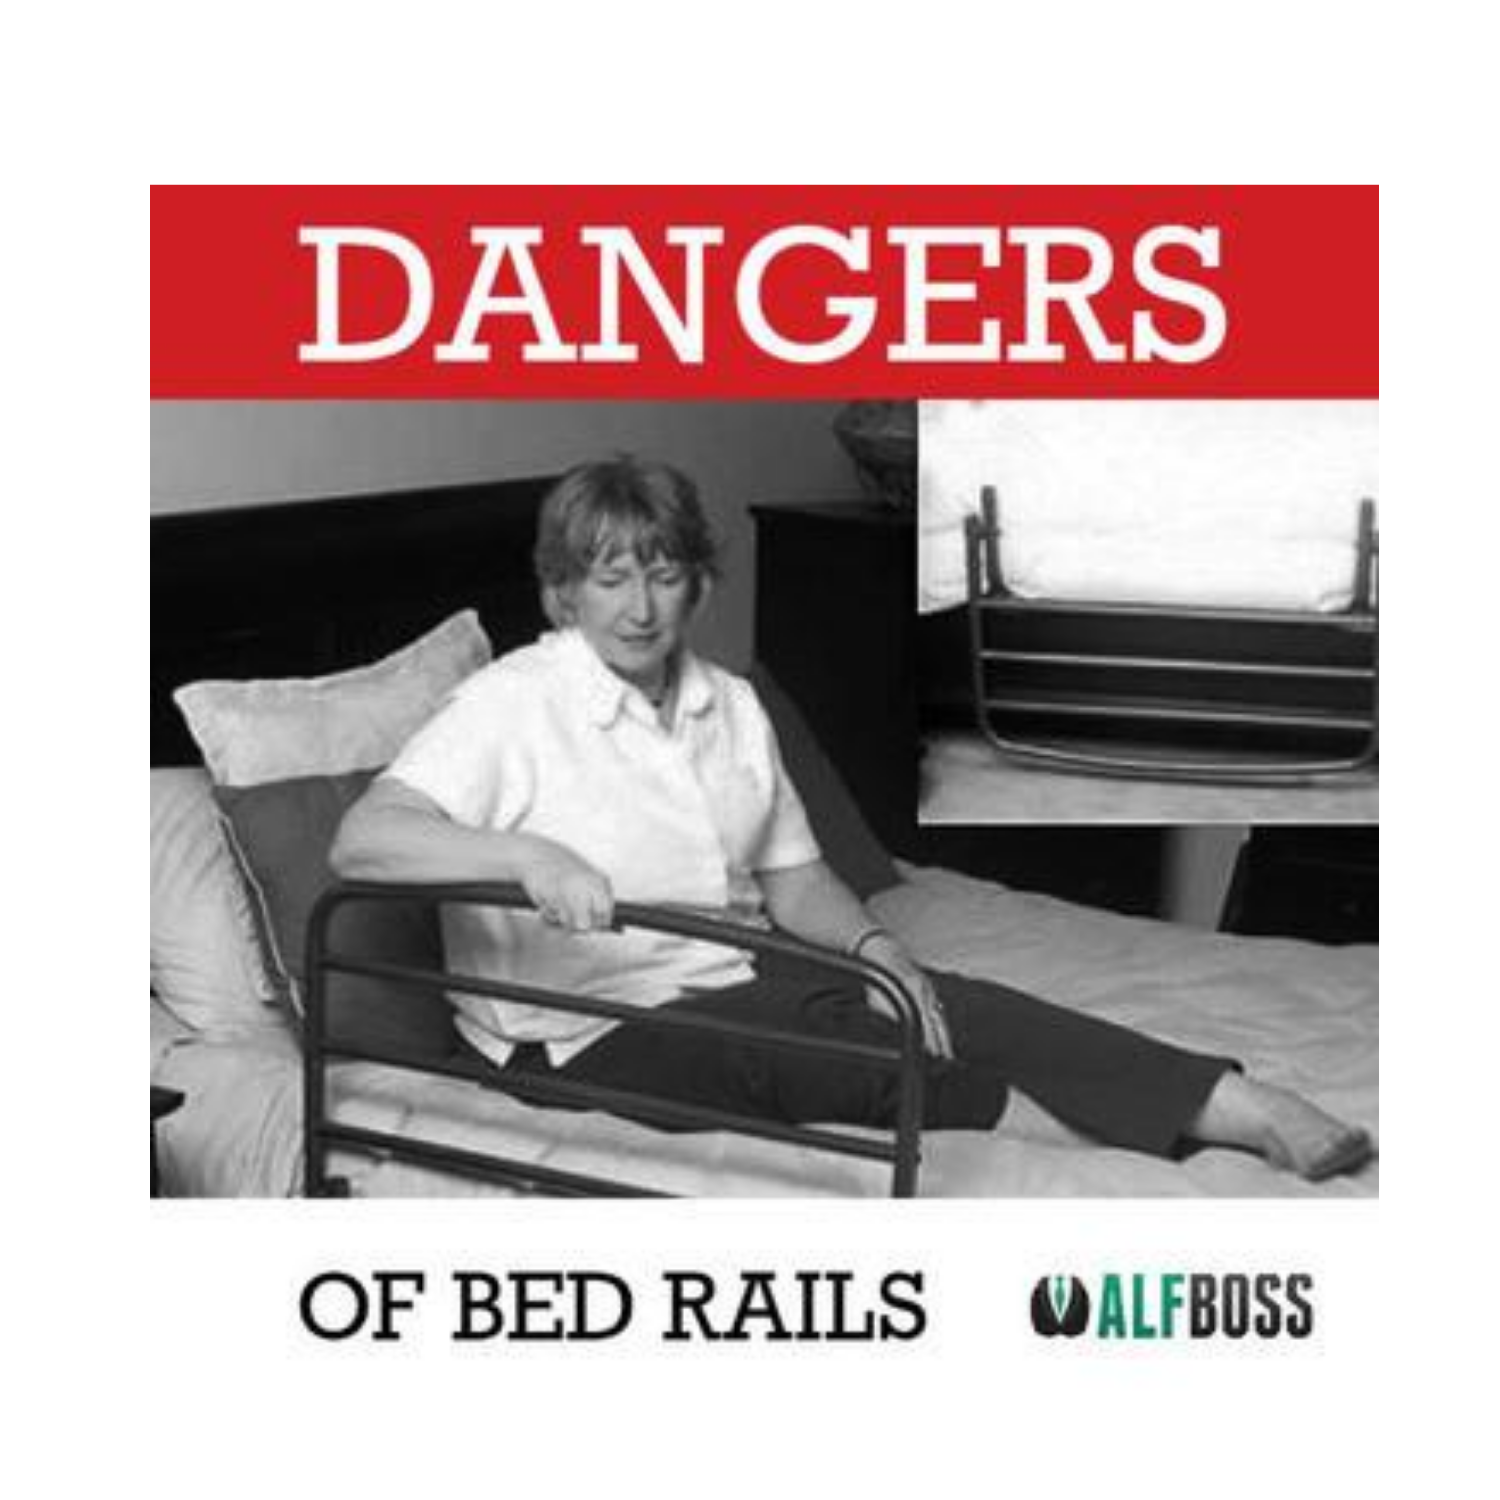 Bed rail dangers